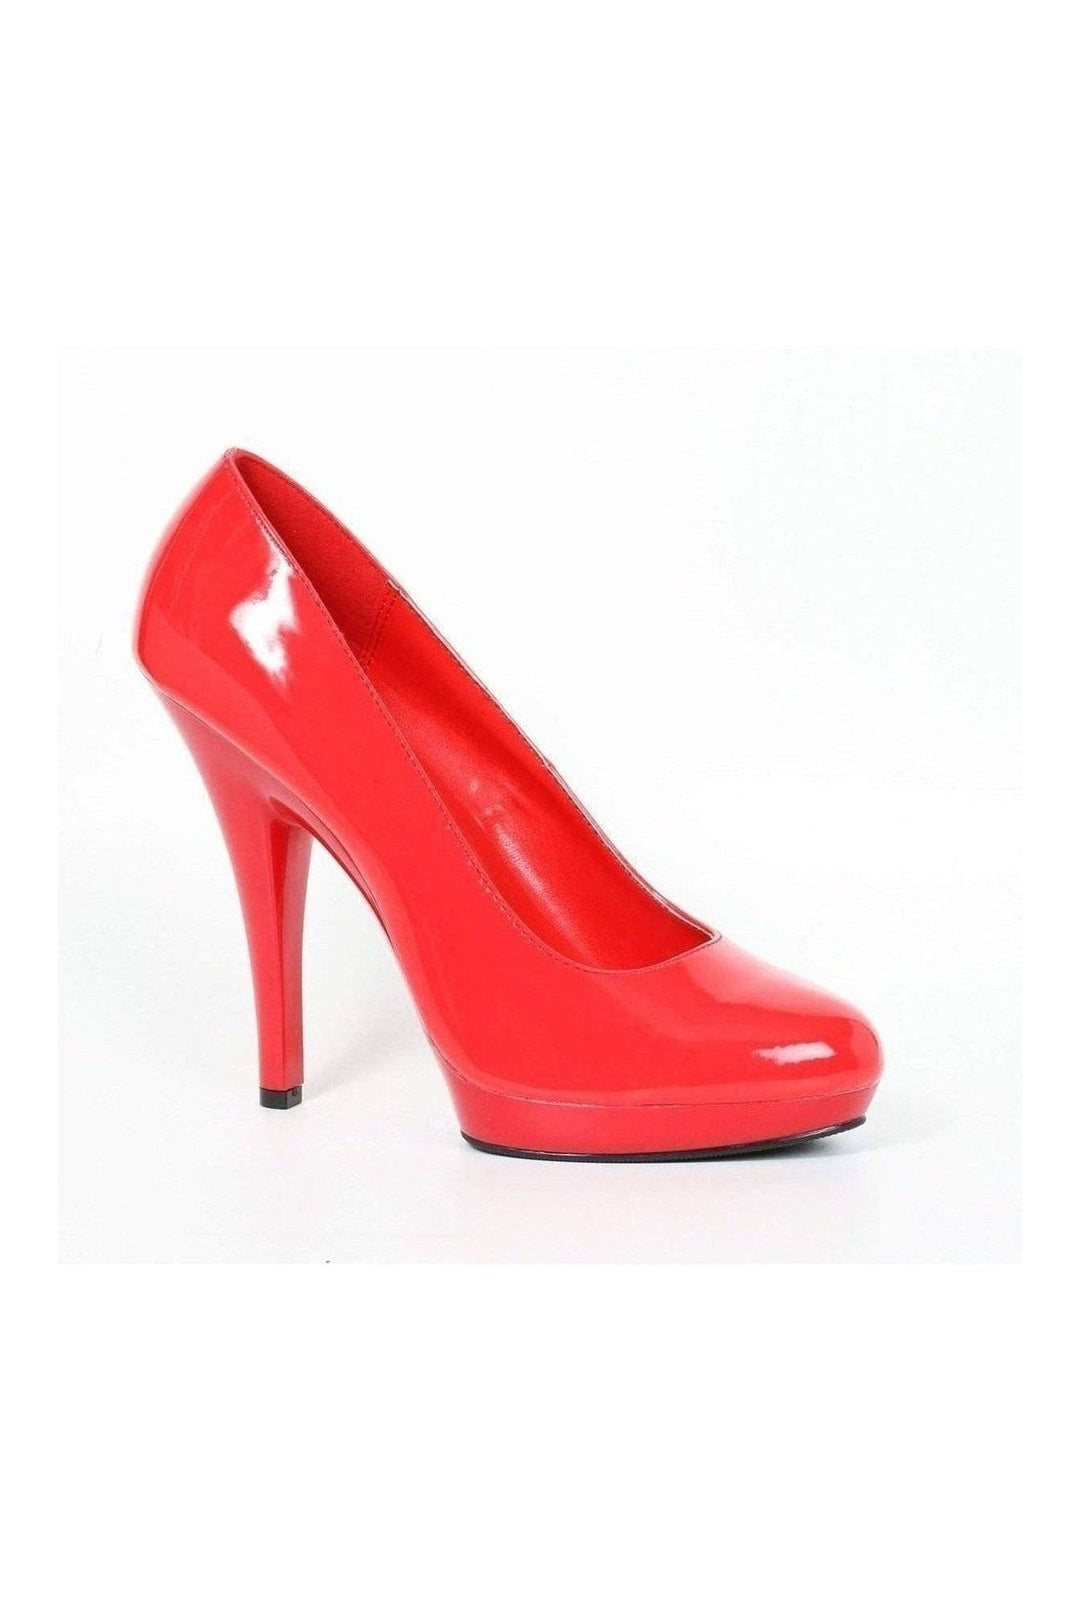 521-FEMME-W Pump | Red Patent-Ellie Shoes-Red-Pumps-SEXYSHOES.COM